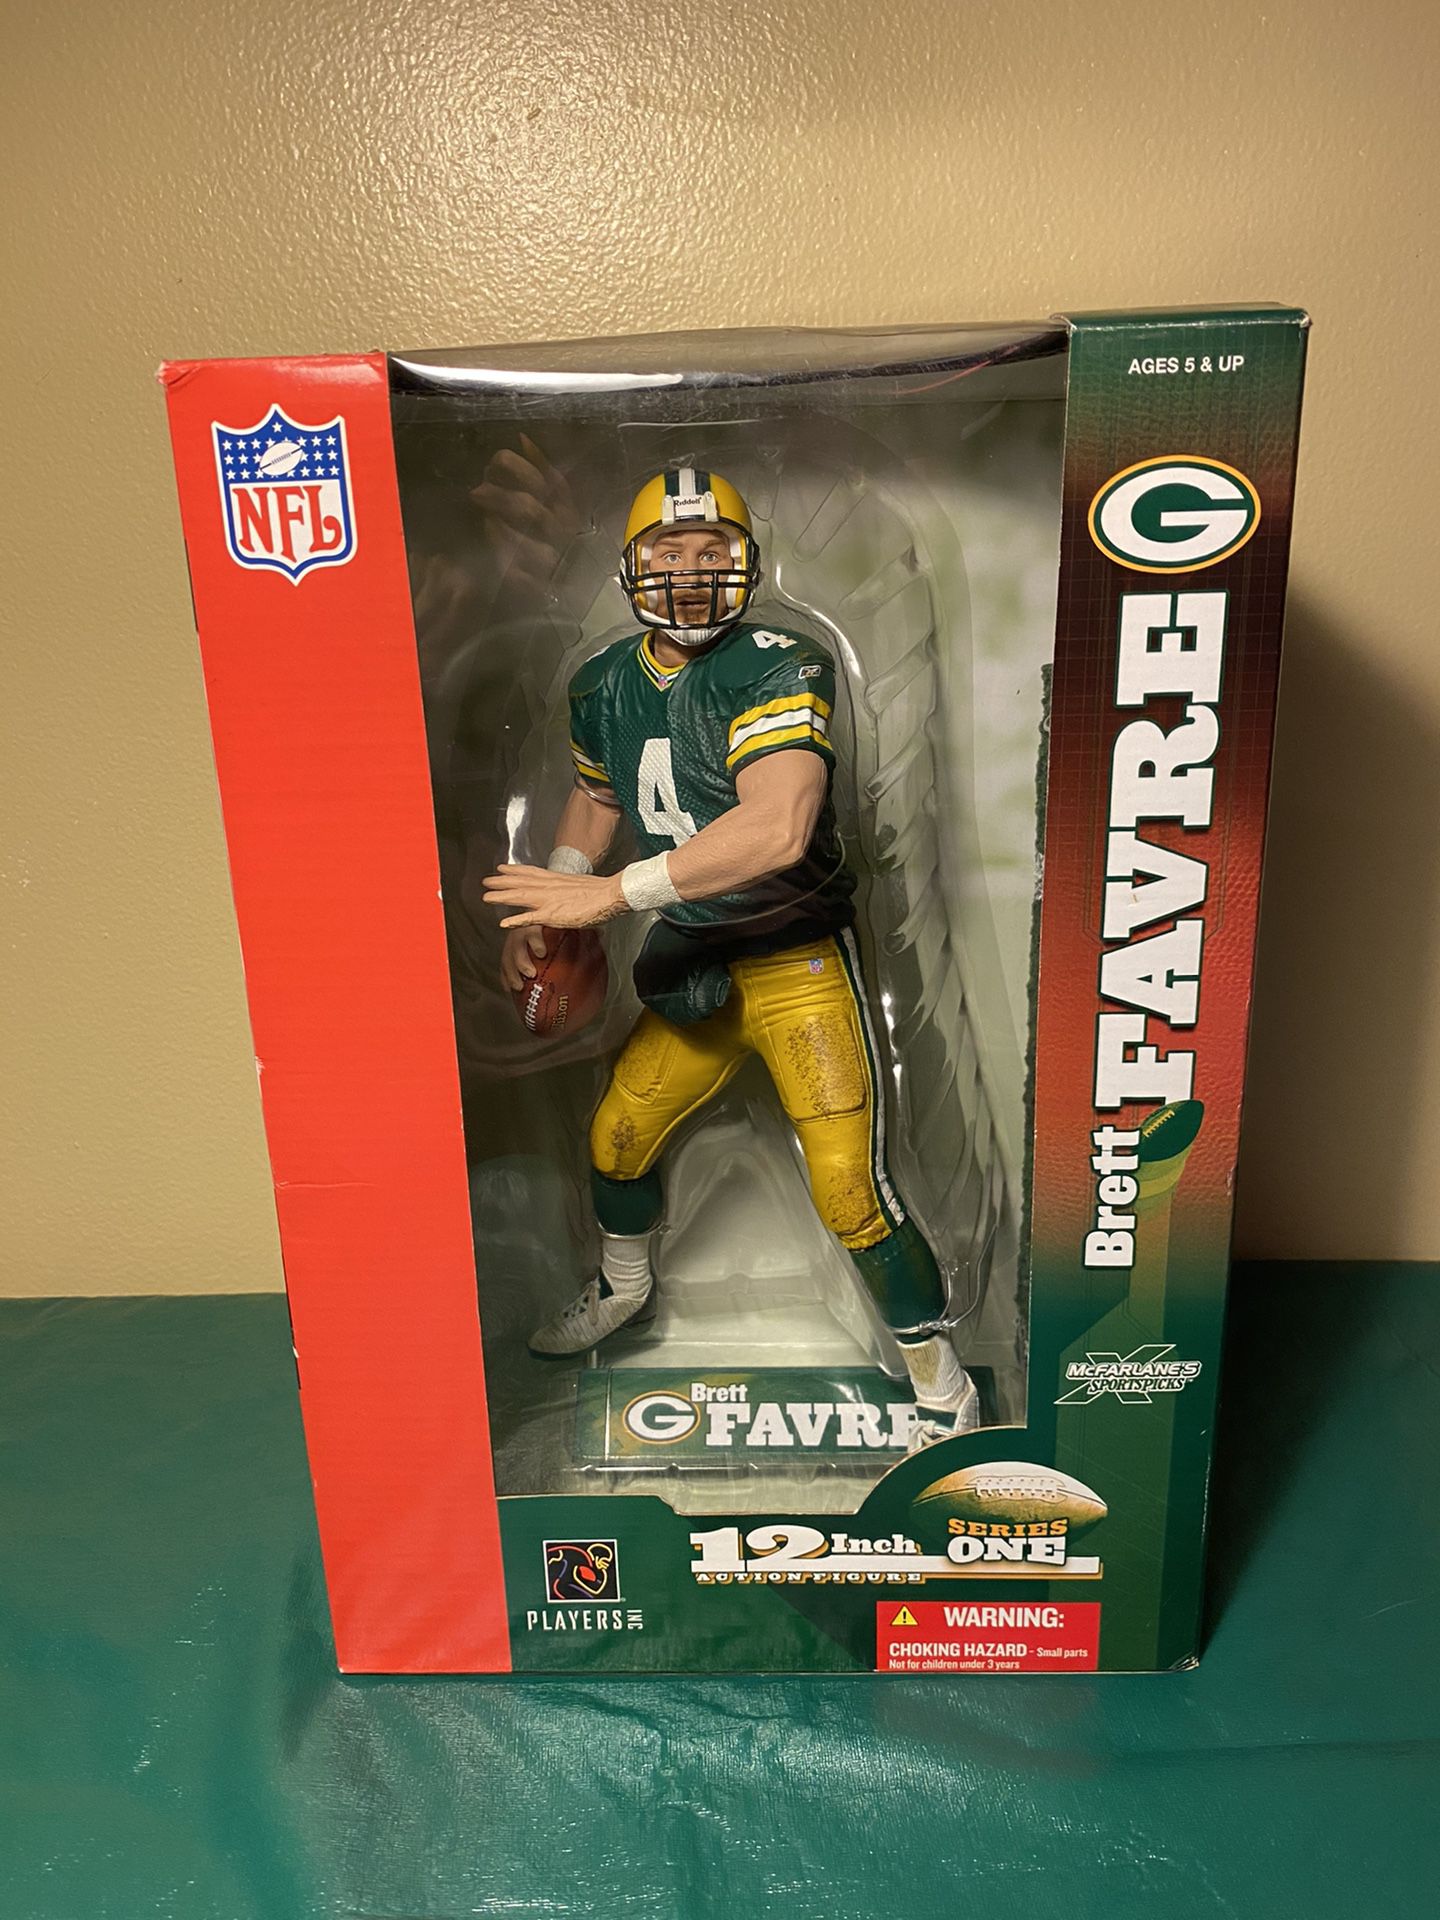 NIB Brett Favre #4 Green Bay Packers NFL 12 Inch Mcfarlane Toys Figure Figurine